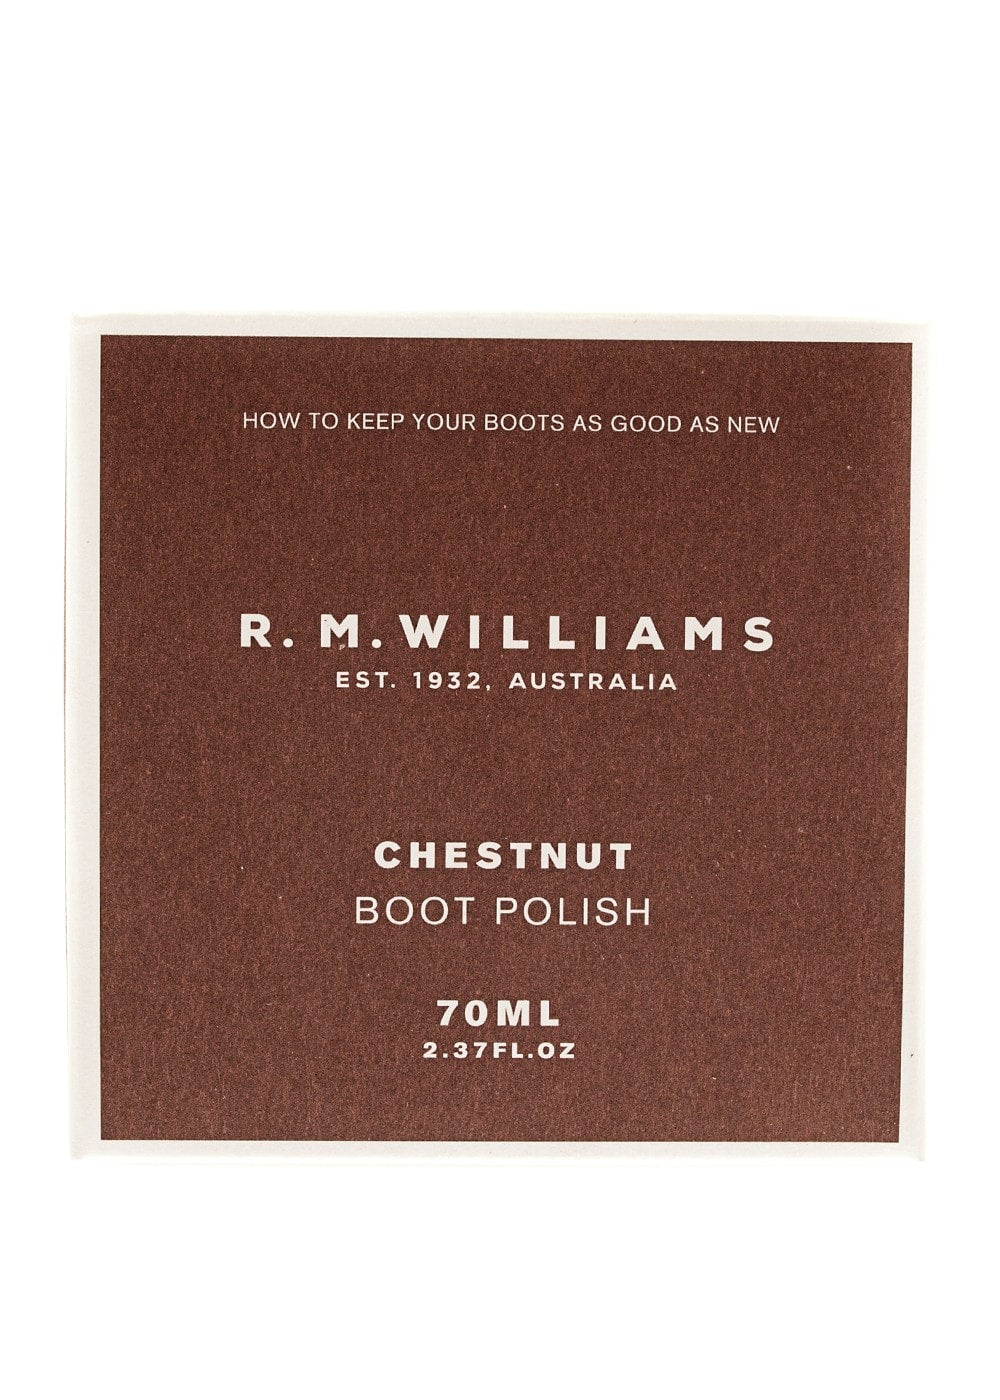 R M Williams Boot Polish - Chestnut